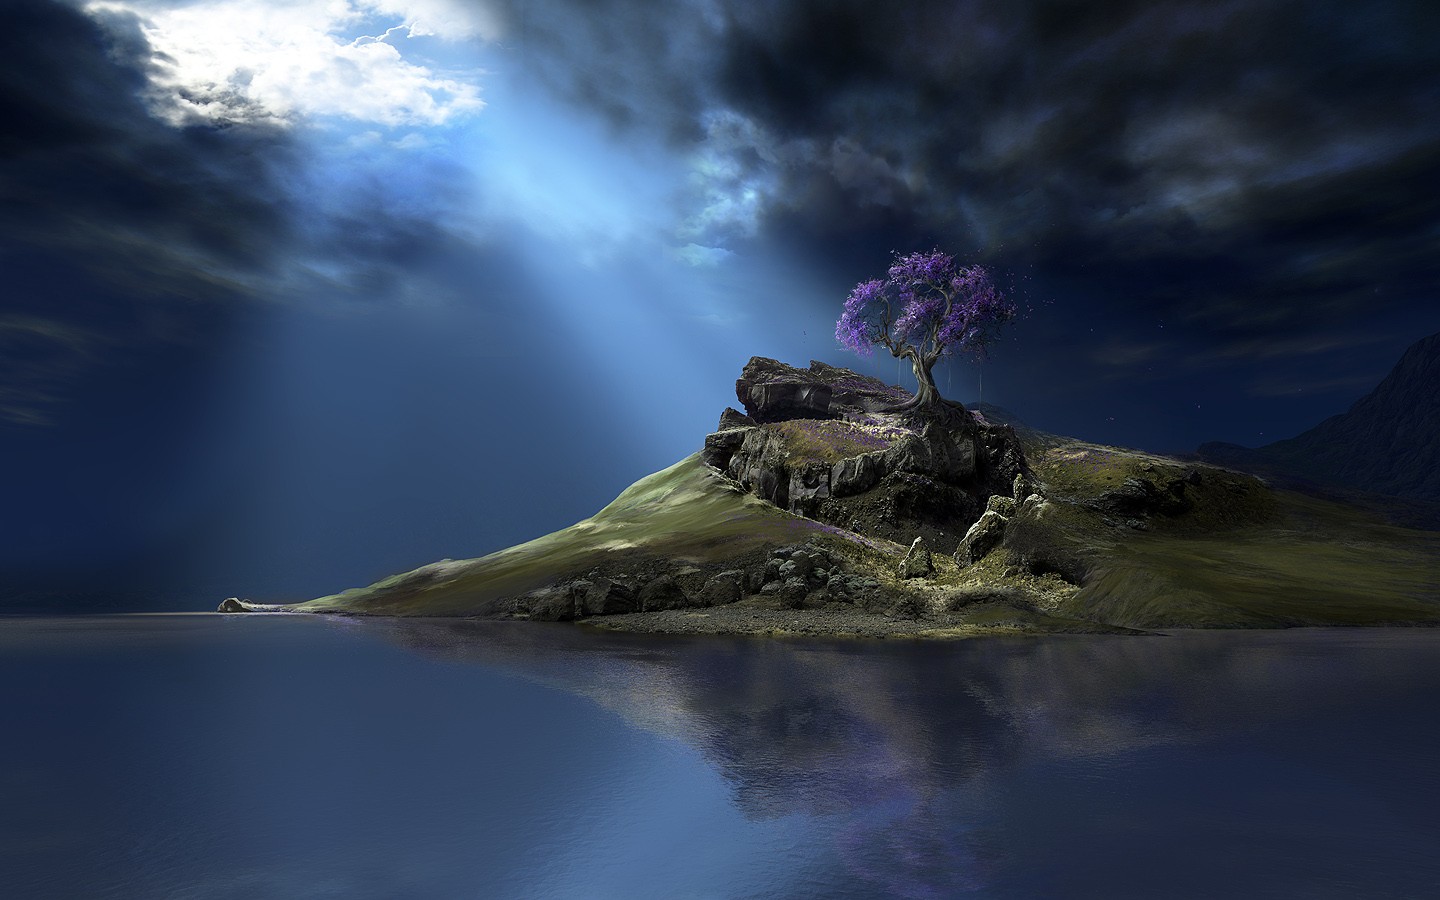 General 1440x900 digital art CGI nature hills mountains rocks trees water clouds sunlight reflection landscape